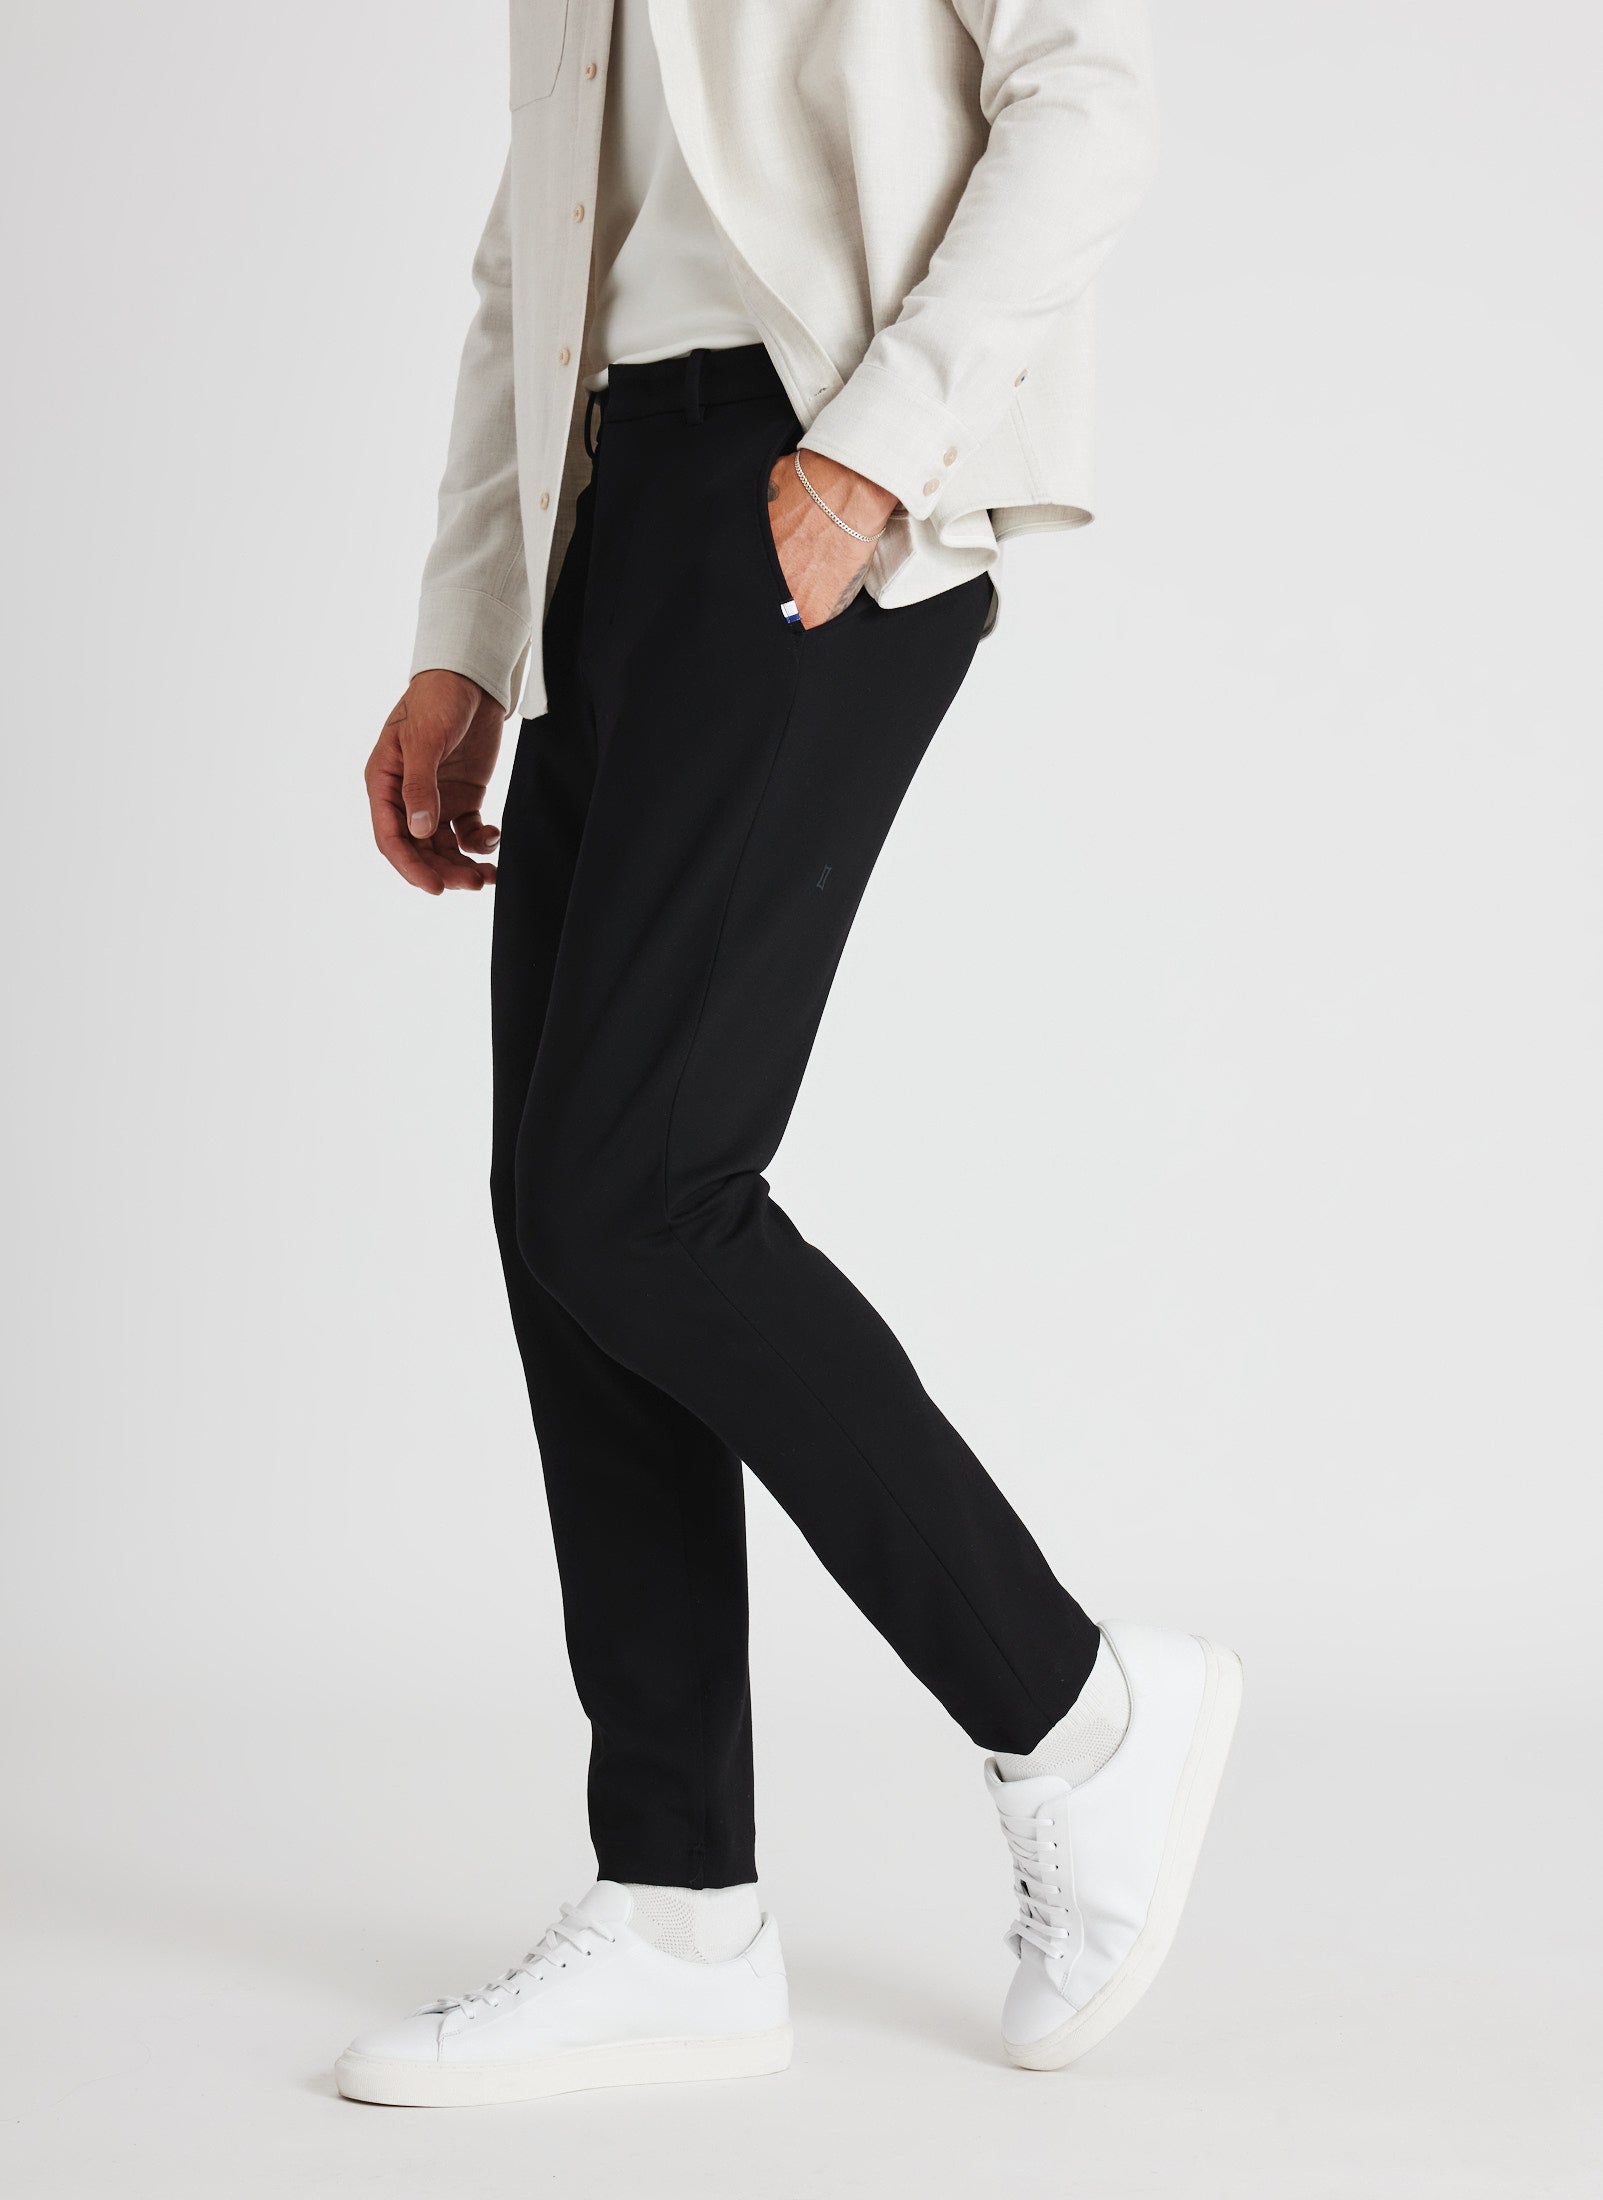 Zara Plaid Cuffed Trouser Pants xs  Trouser pants, Zara, Clothes design